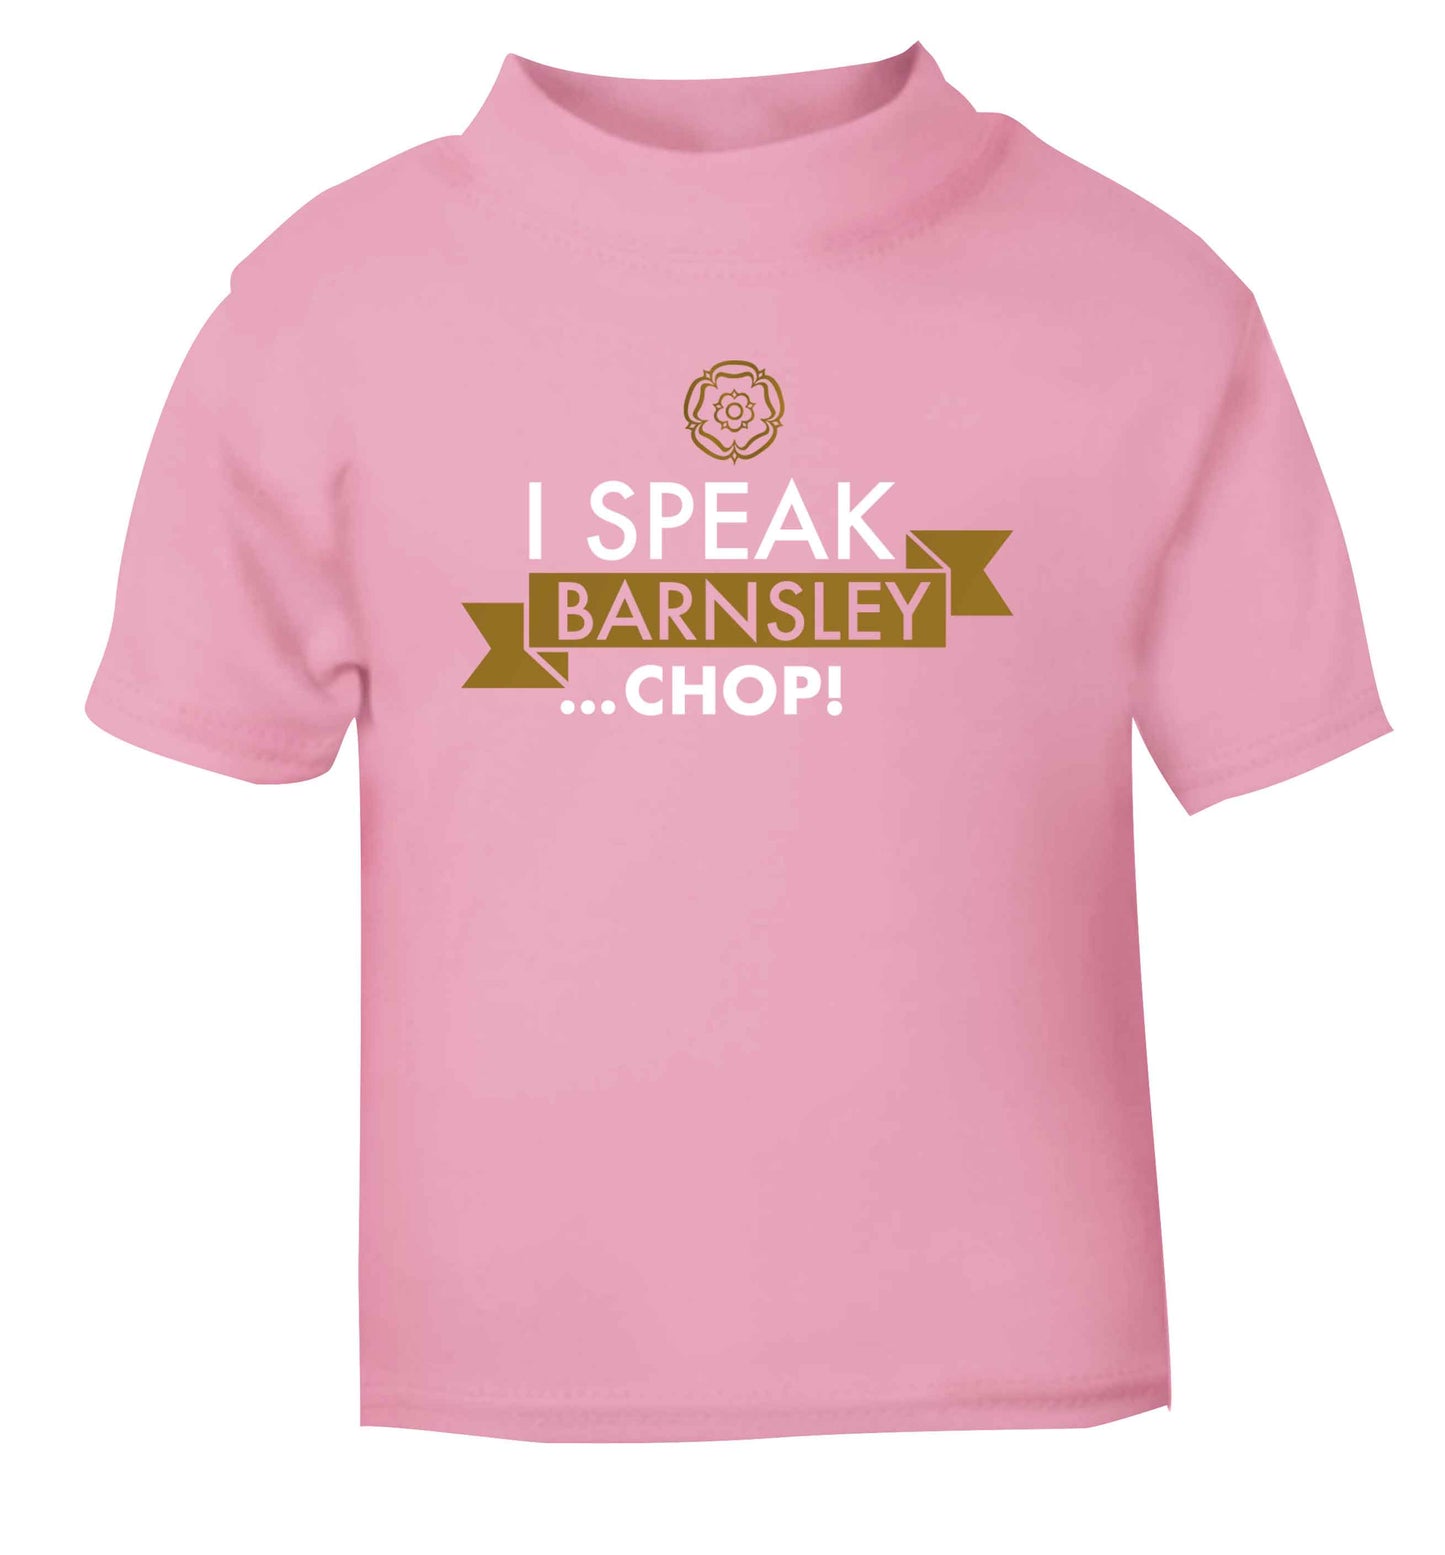 I speak Barnsley...chop! light pink Baby Toddler Tshirt 2 Years